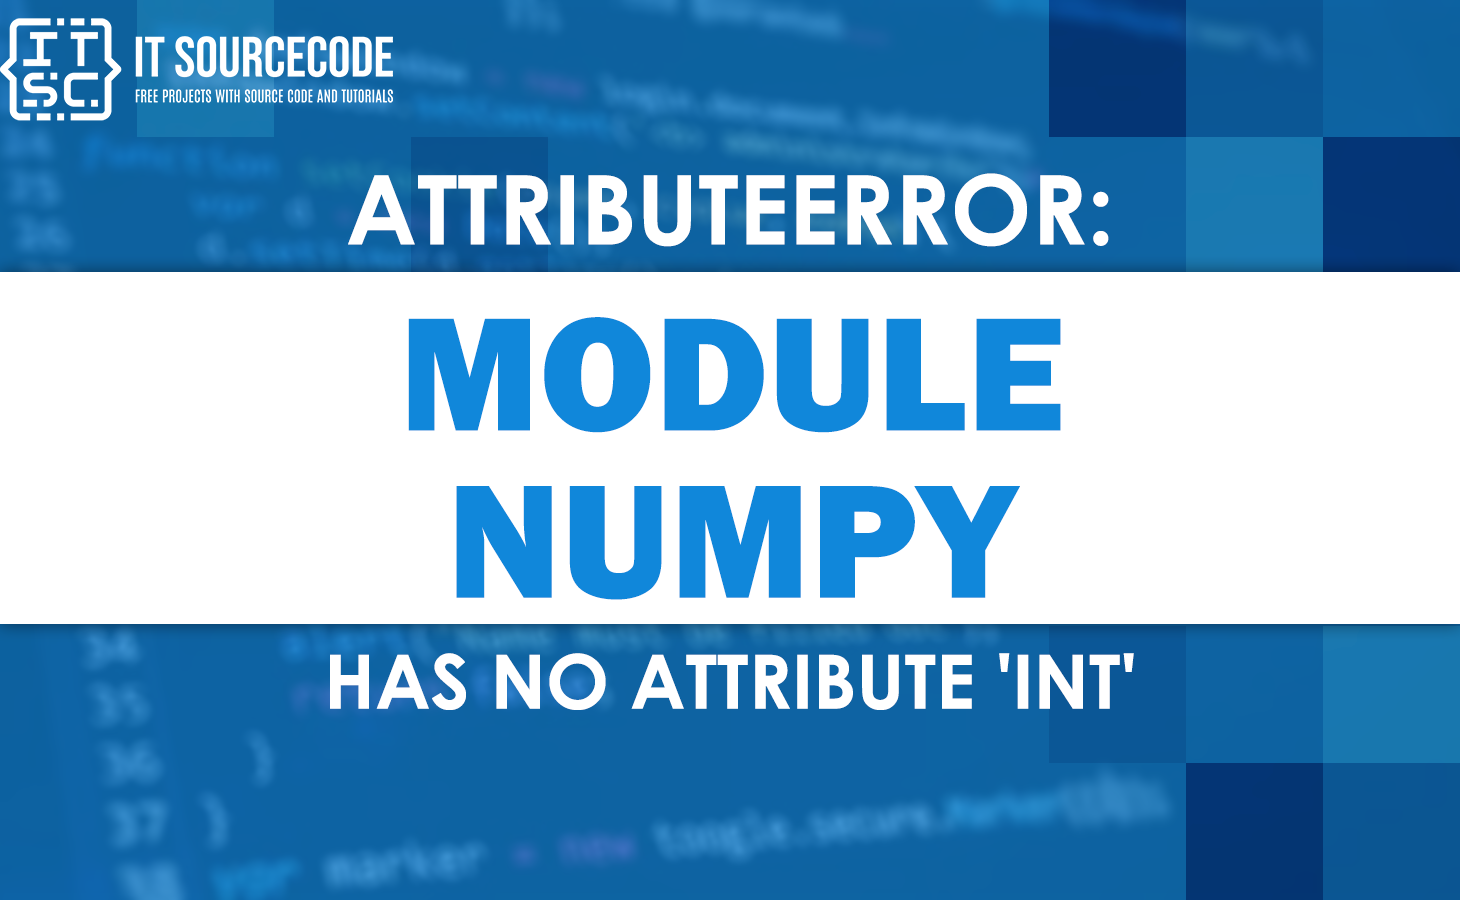 Attributeerror: module 'numpy' has no attribute 'int'